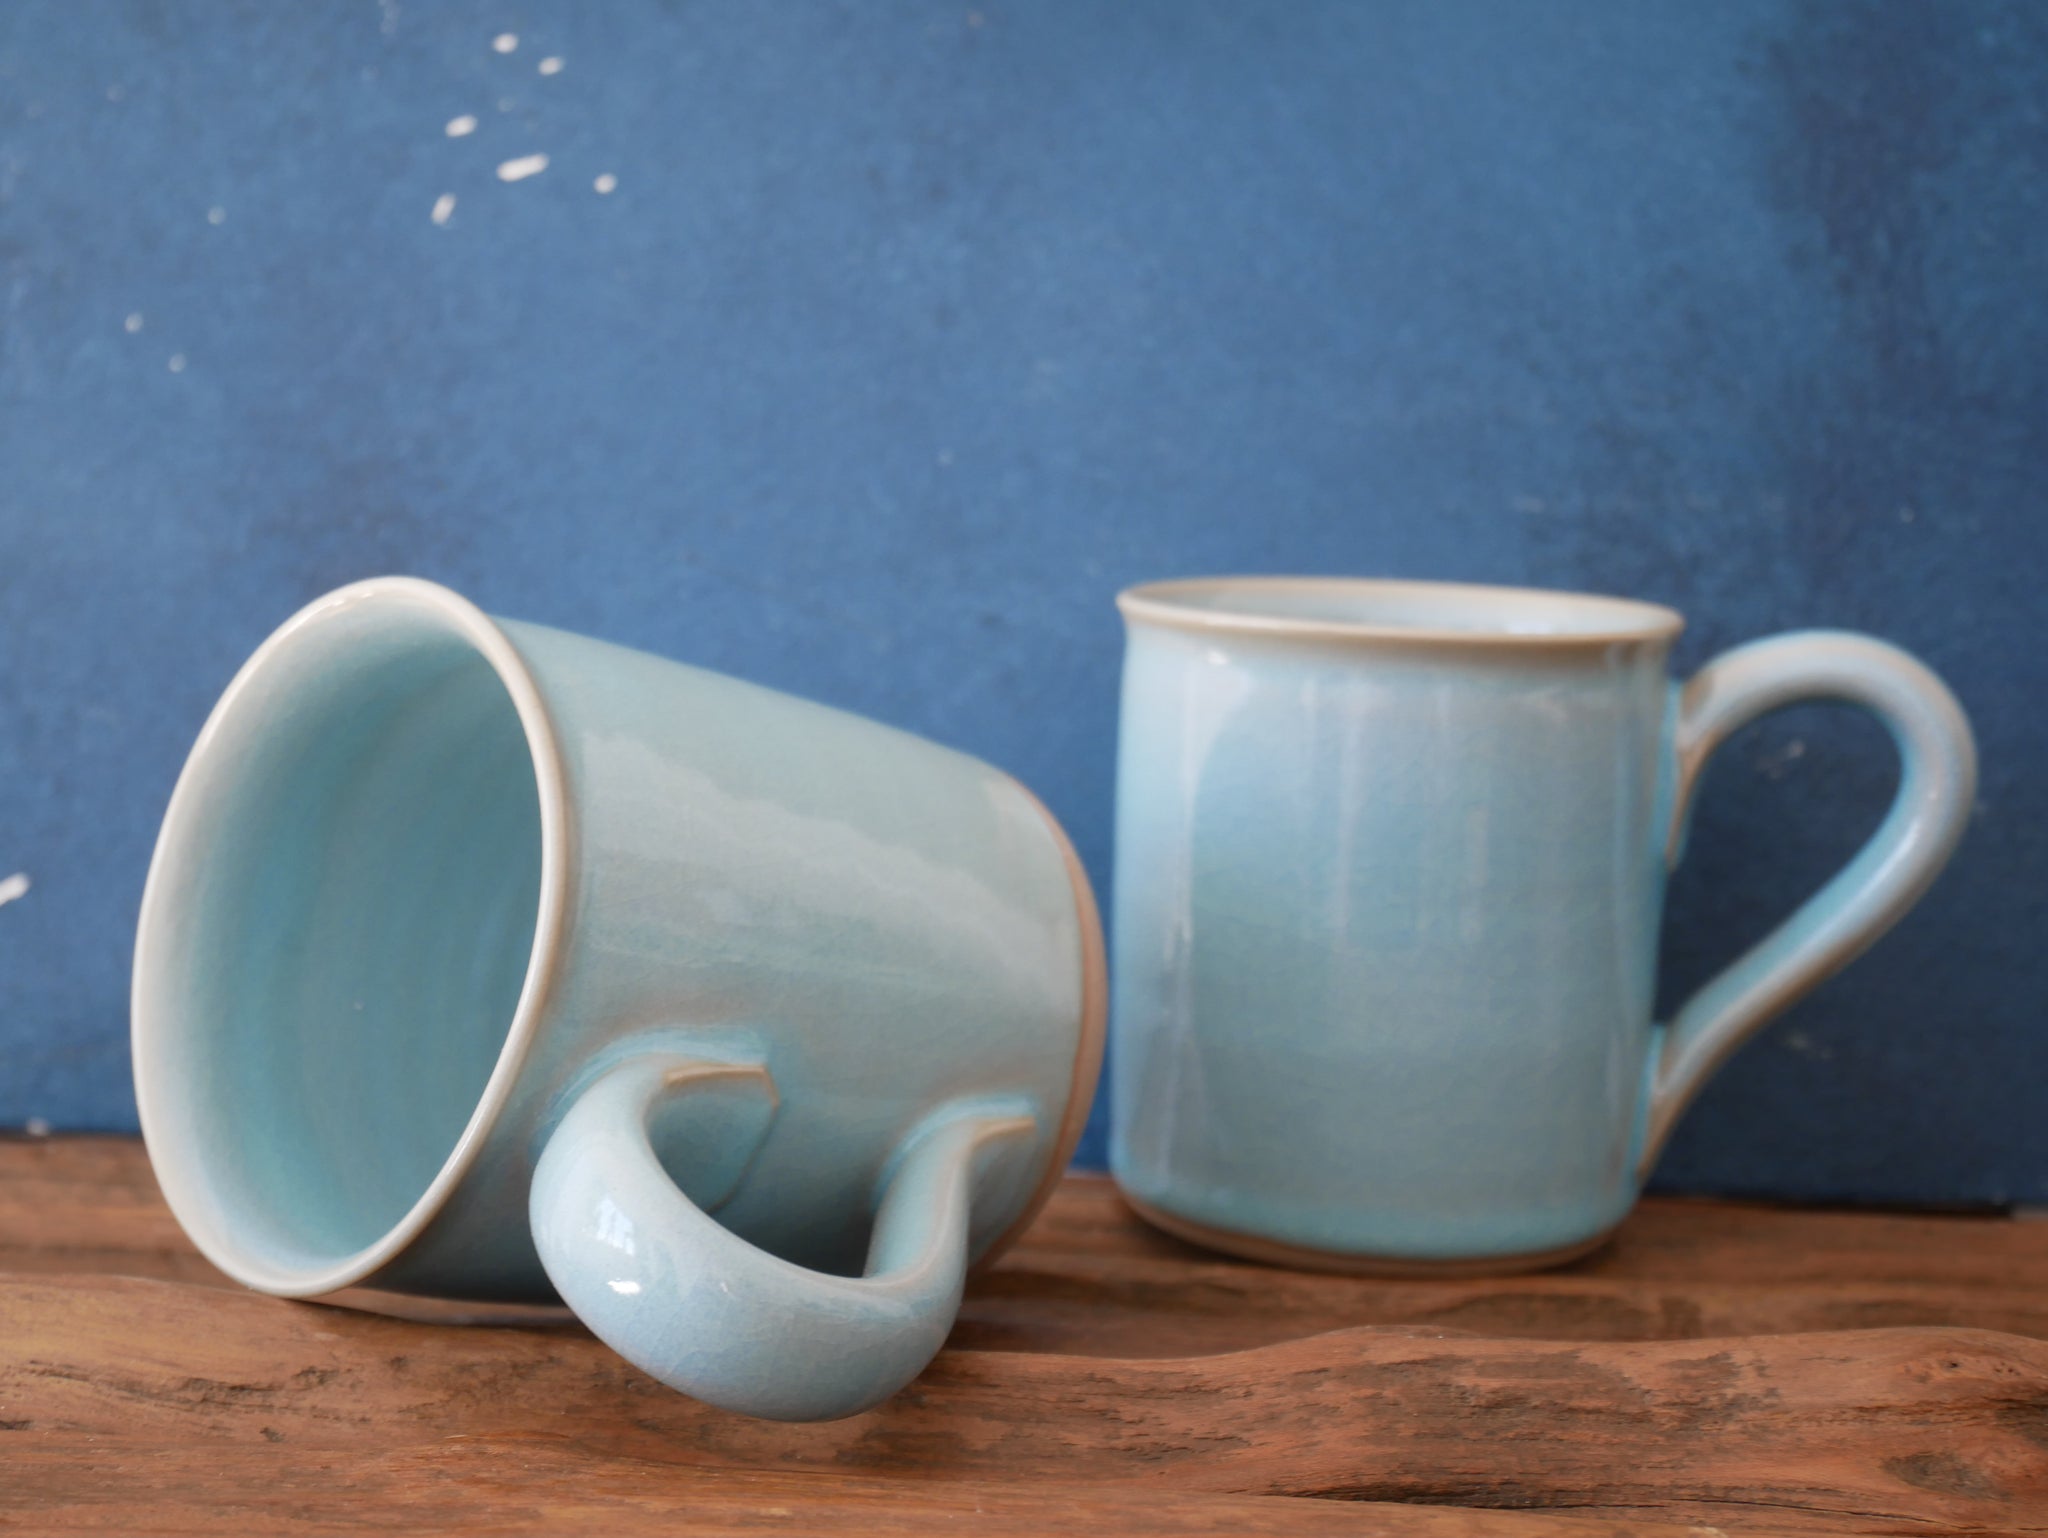 Light Blue celadon mug